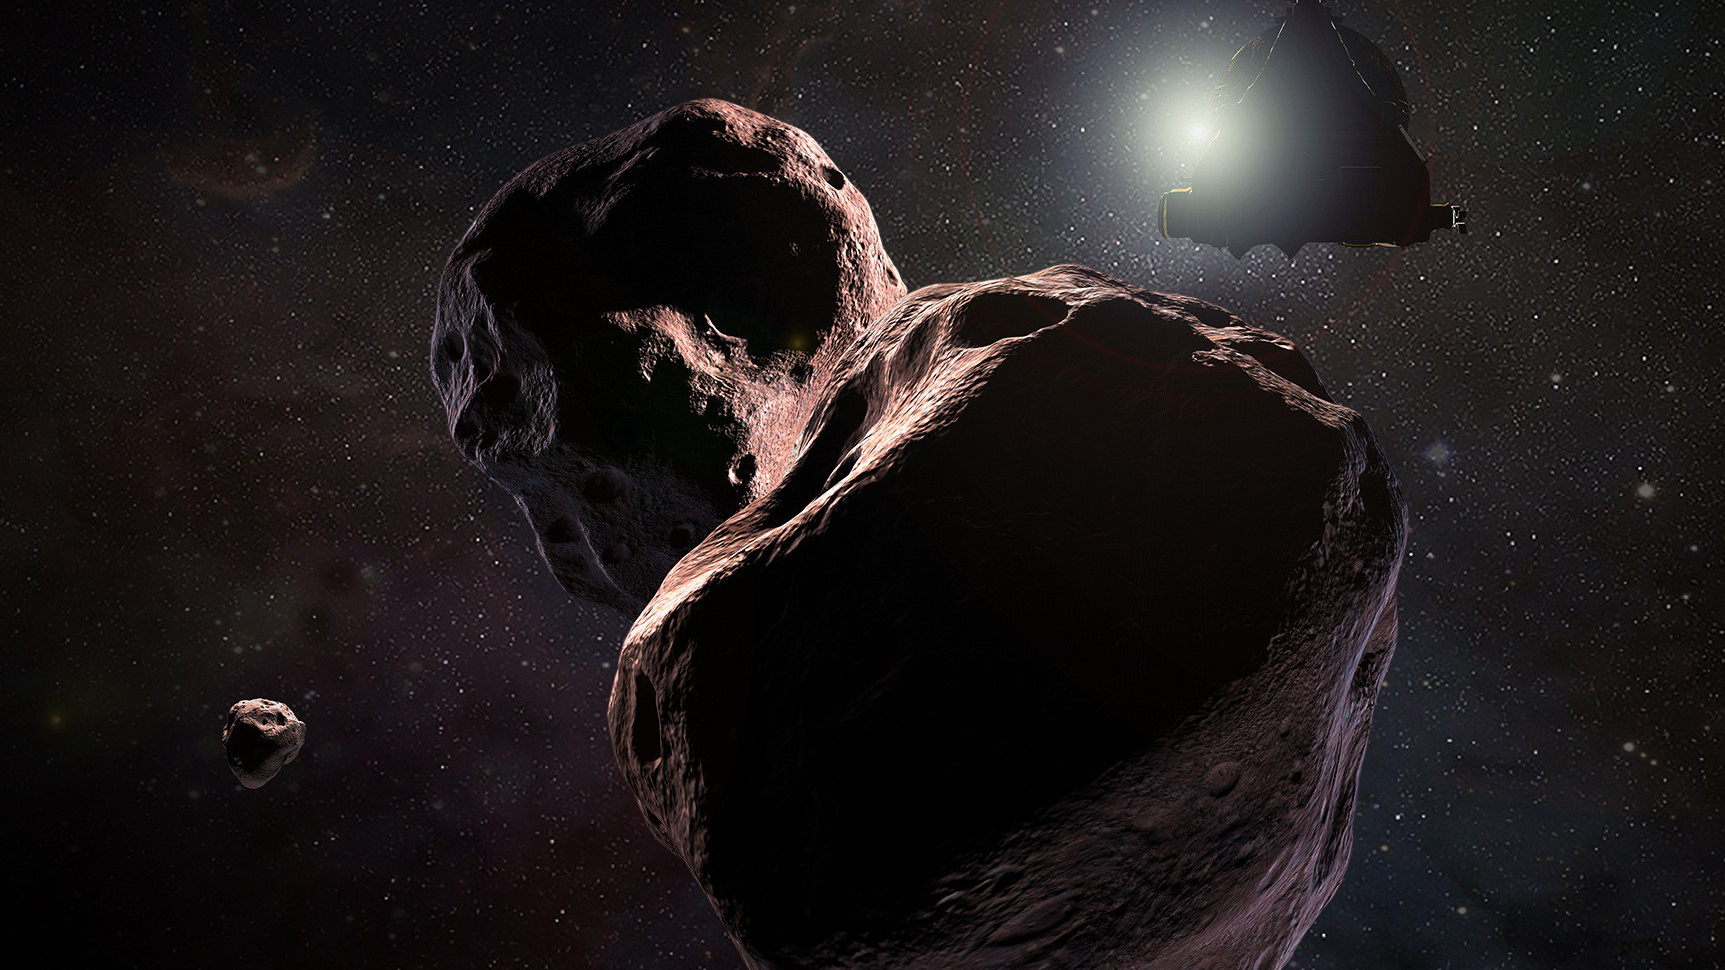 2014 MU69 ( NASA/JHUAPL/SwRI/Steve Gribben )